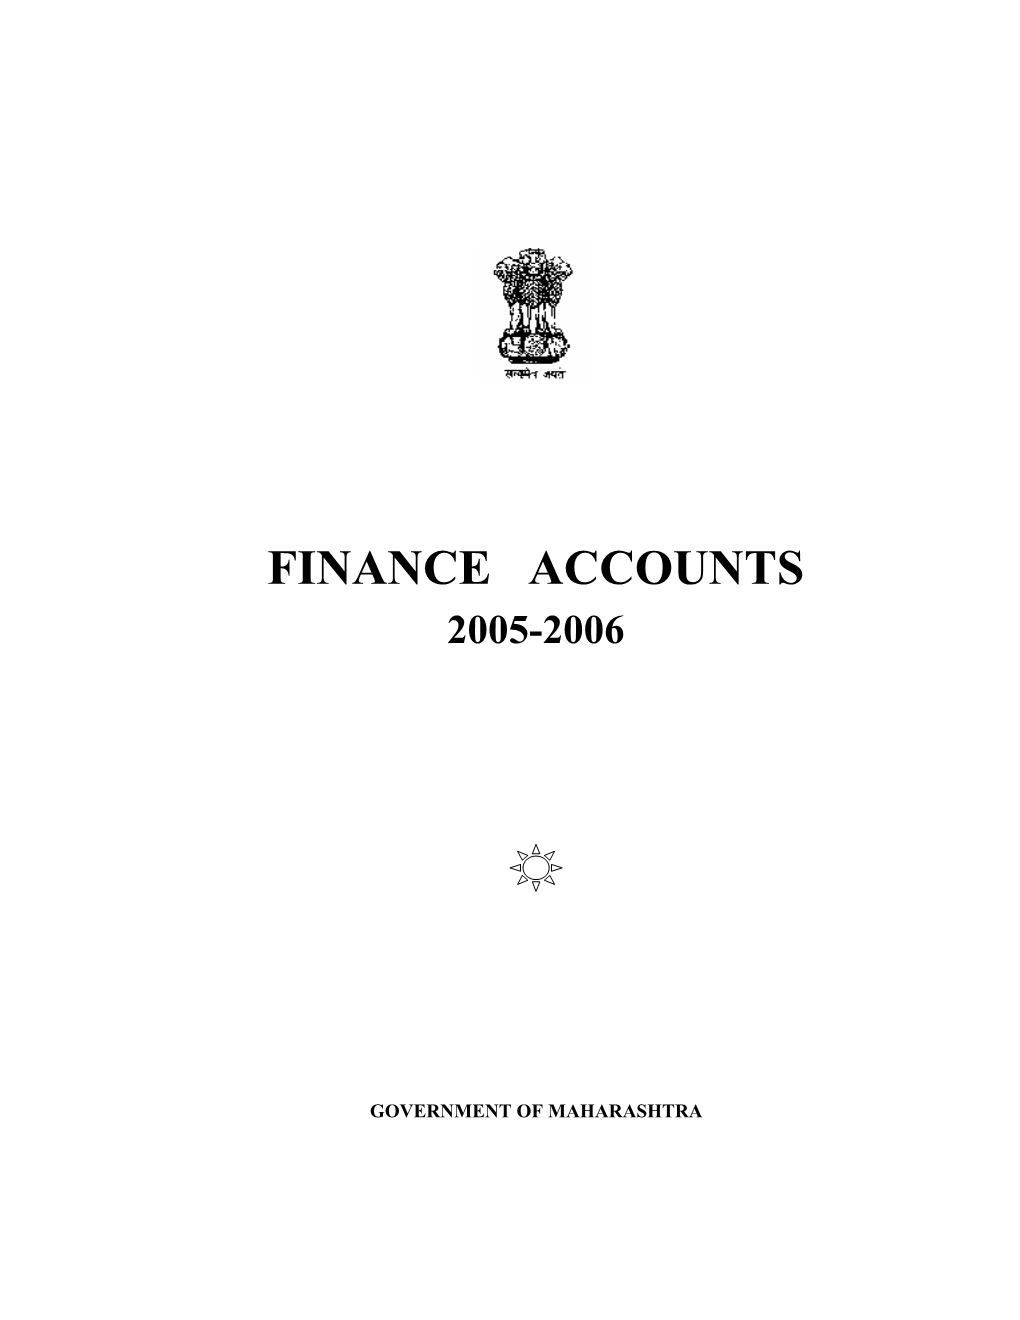 Finance Accounts 2005-2006